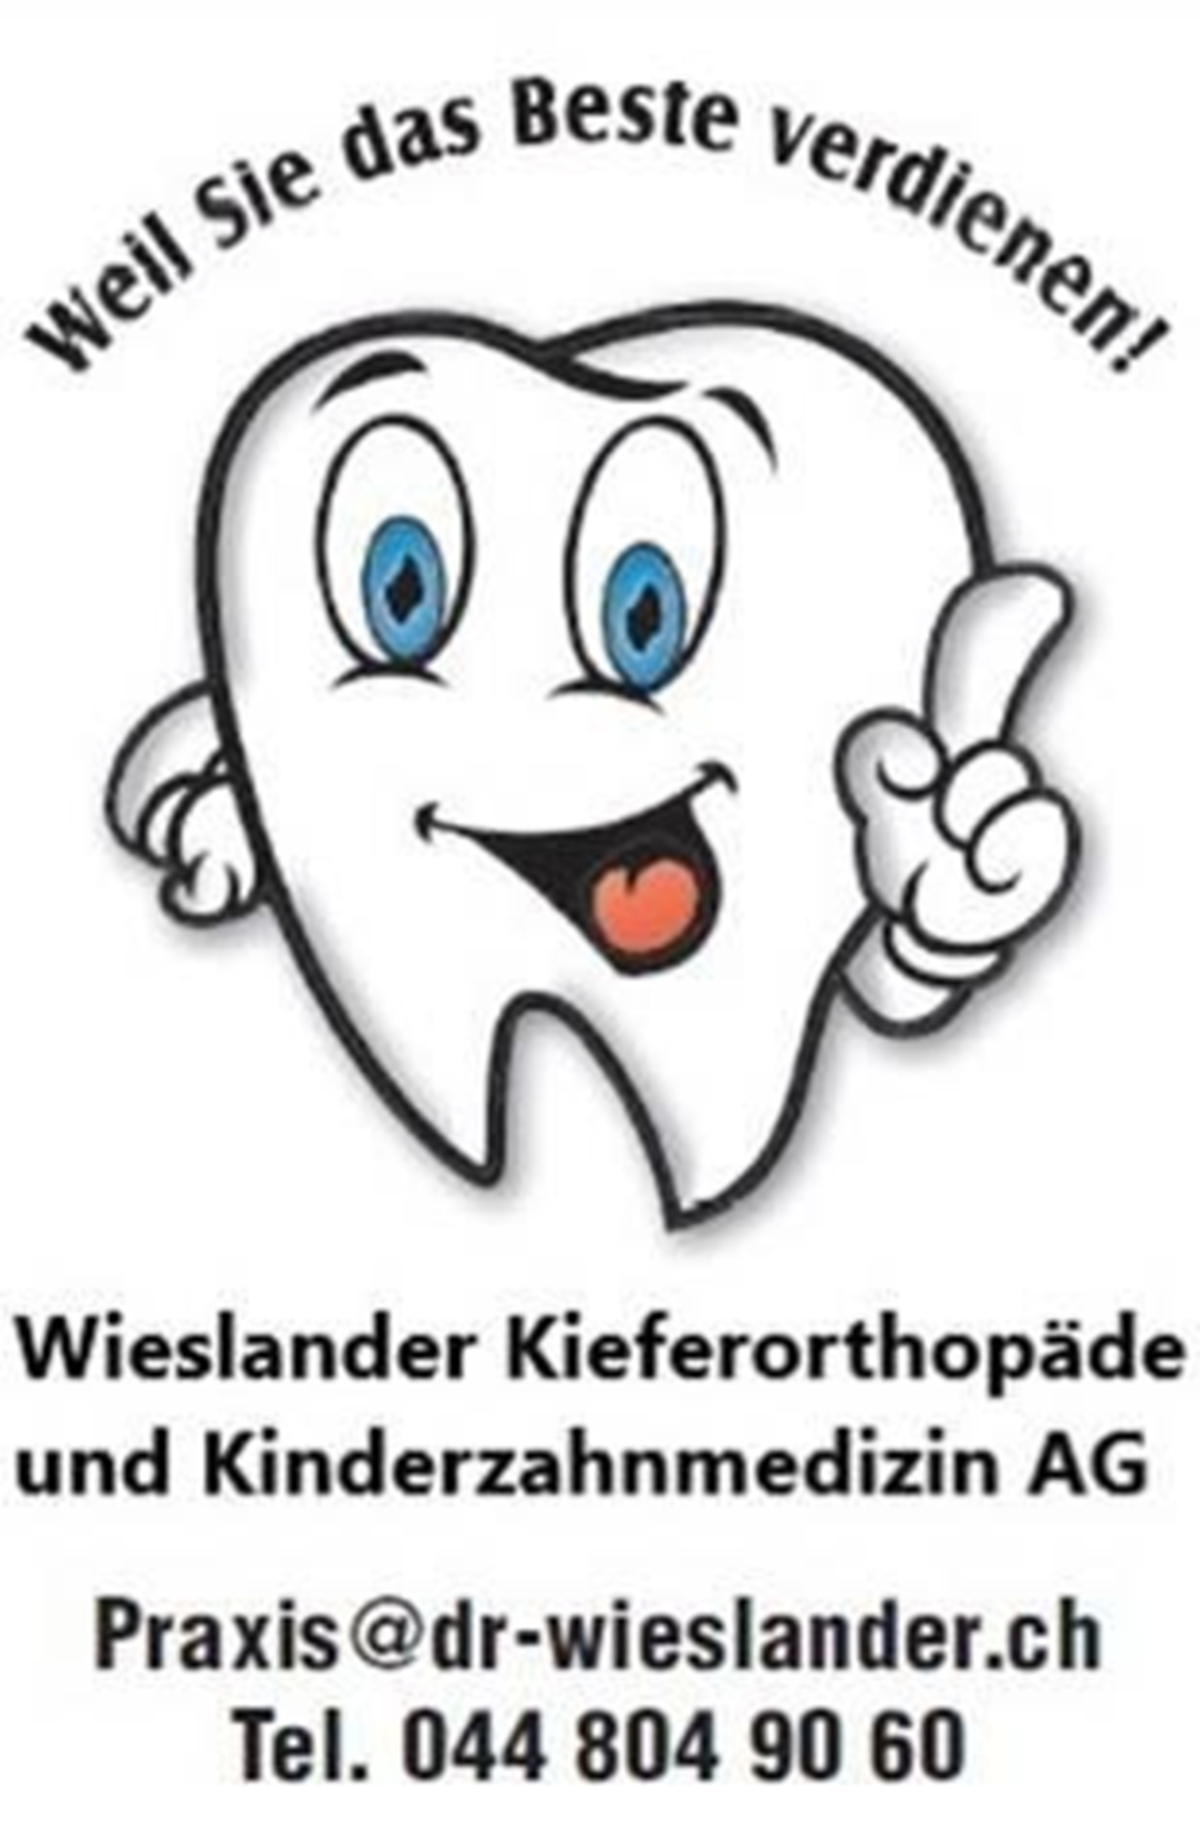 Wieslander Kieferorthopädie und Kinderzahnmedizin AG